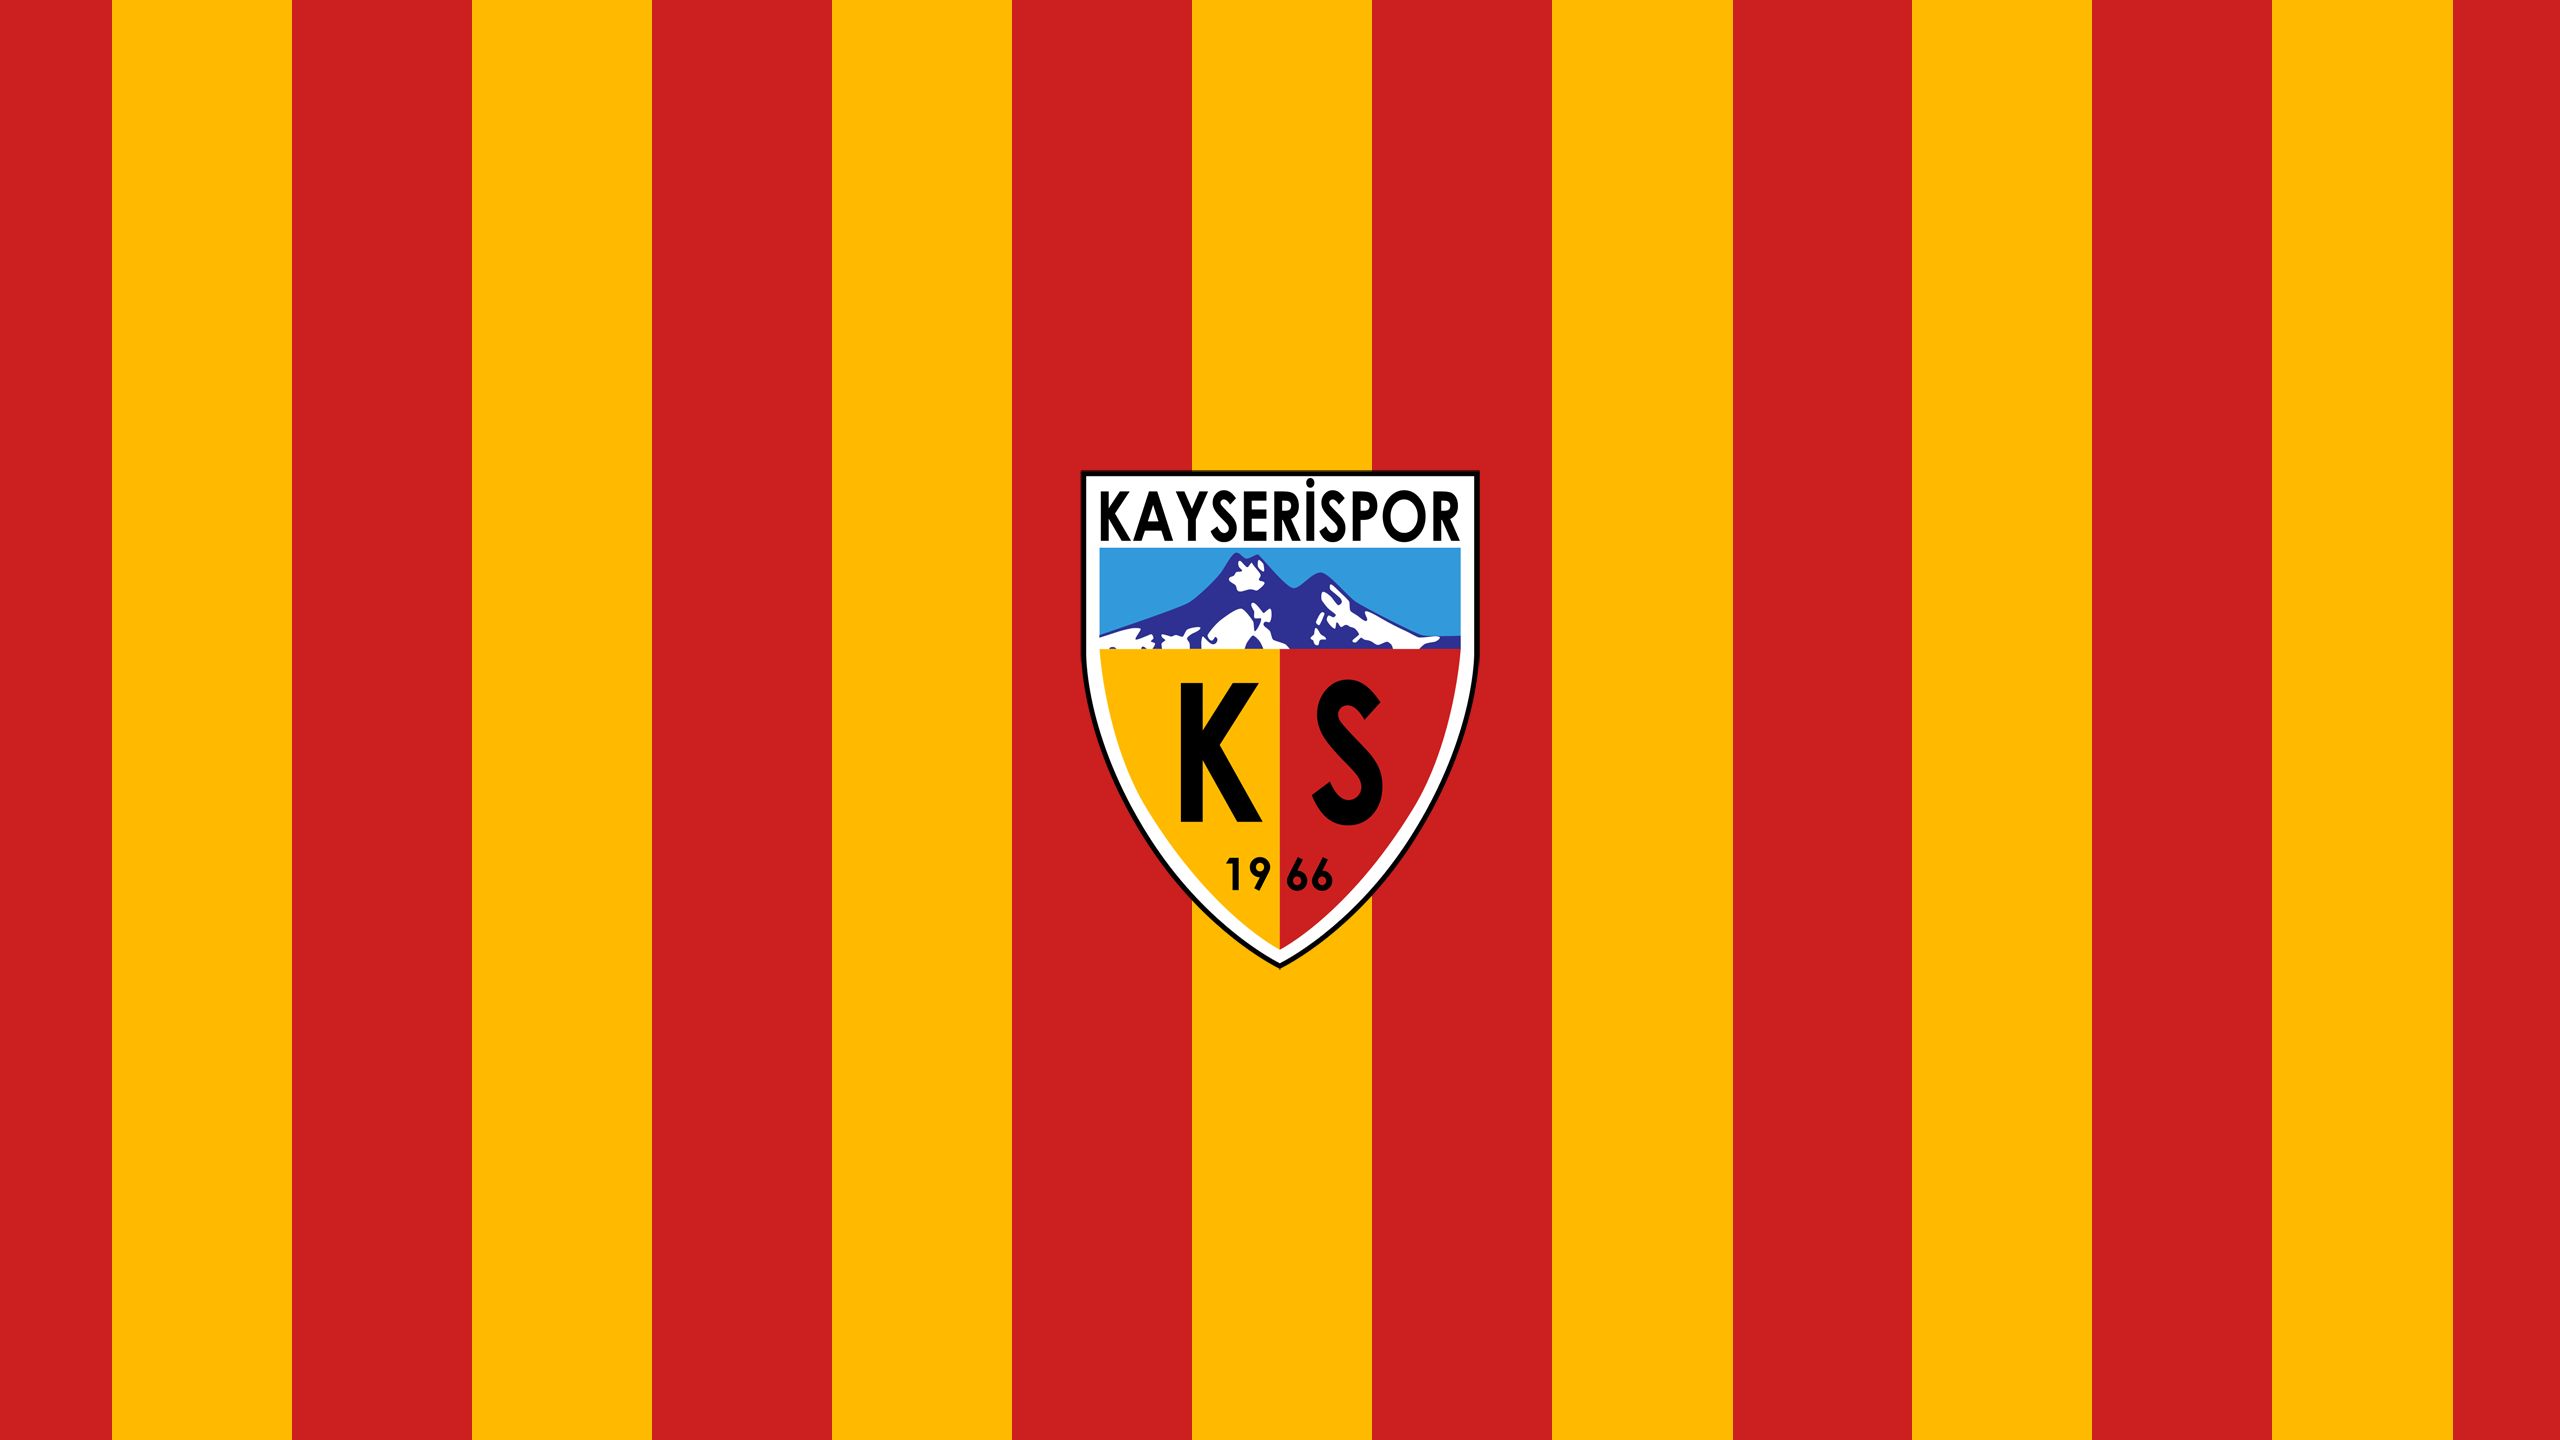 Baixar papel de parede para celular de Esportes, Futebol, Logotipo, Emblema, Kayserispor gratuito.